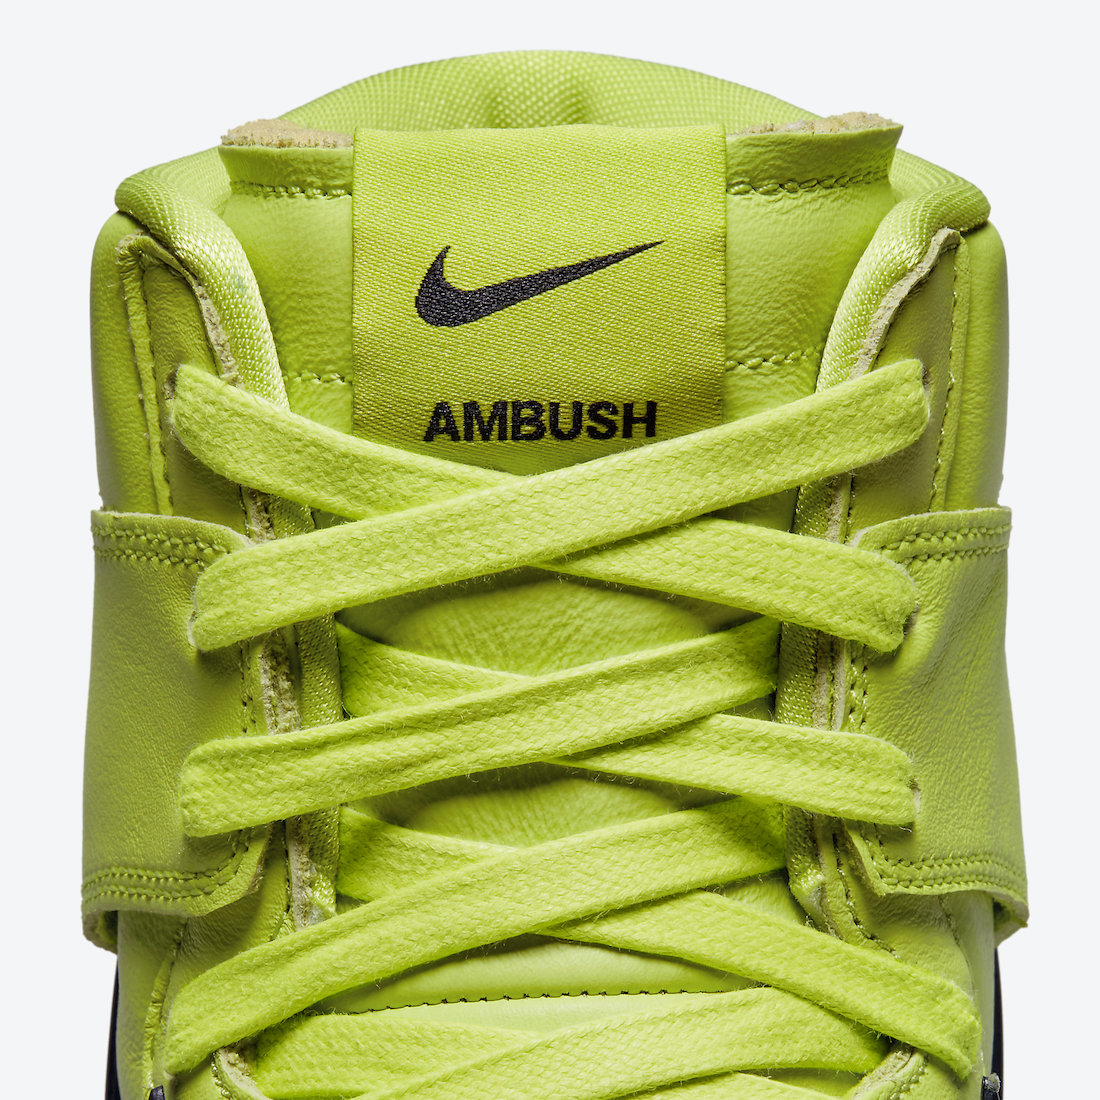 Ambush x Nike Dunk High Flash Lime CU7544-300 Release Date - SBD